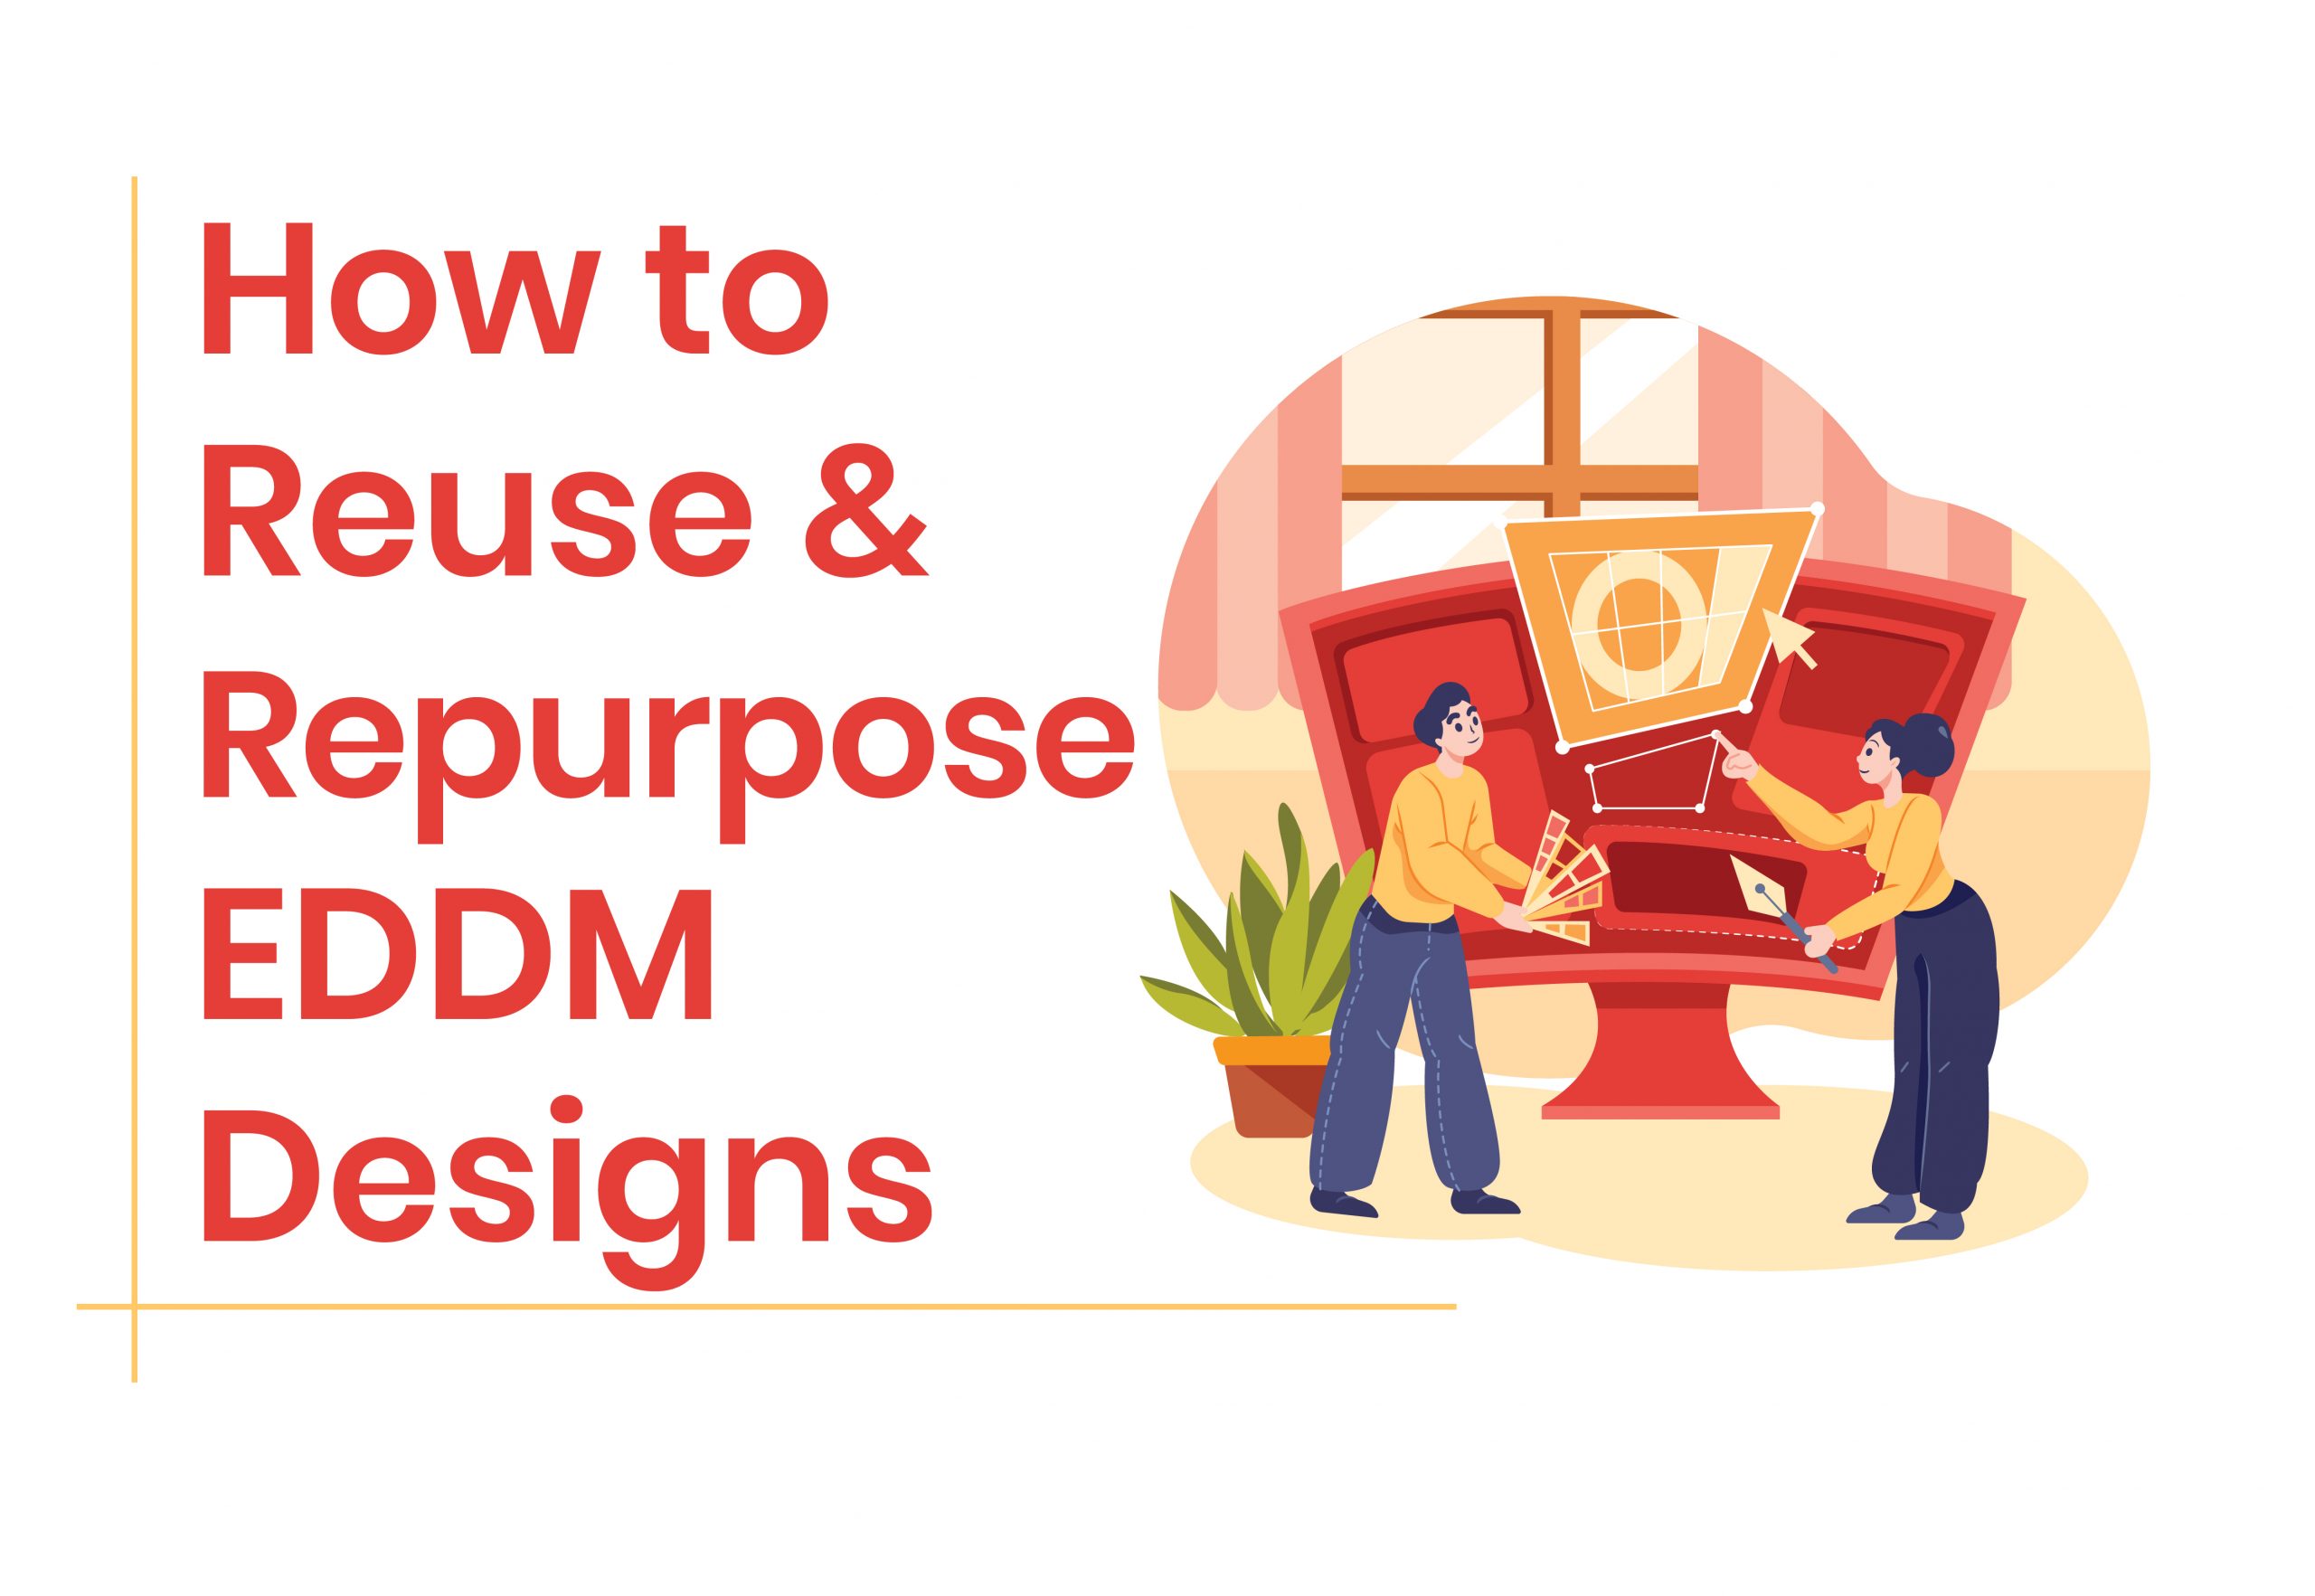 EDDM design template